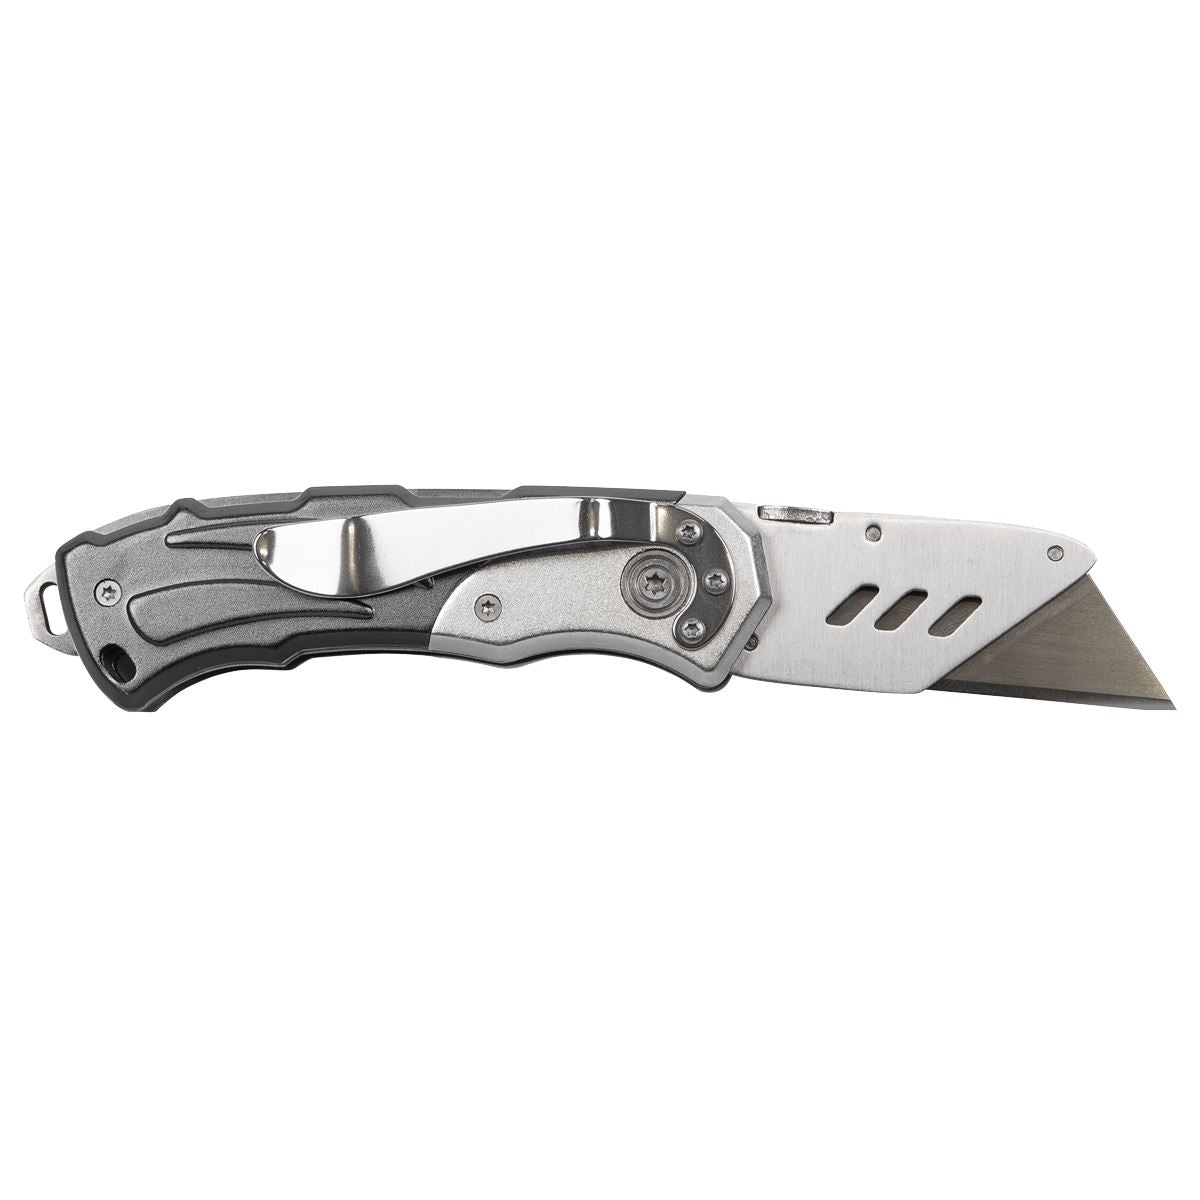 Sealey Premier Pocket Knife Locking with Quick Change Blade